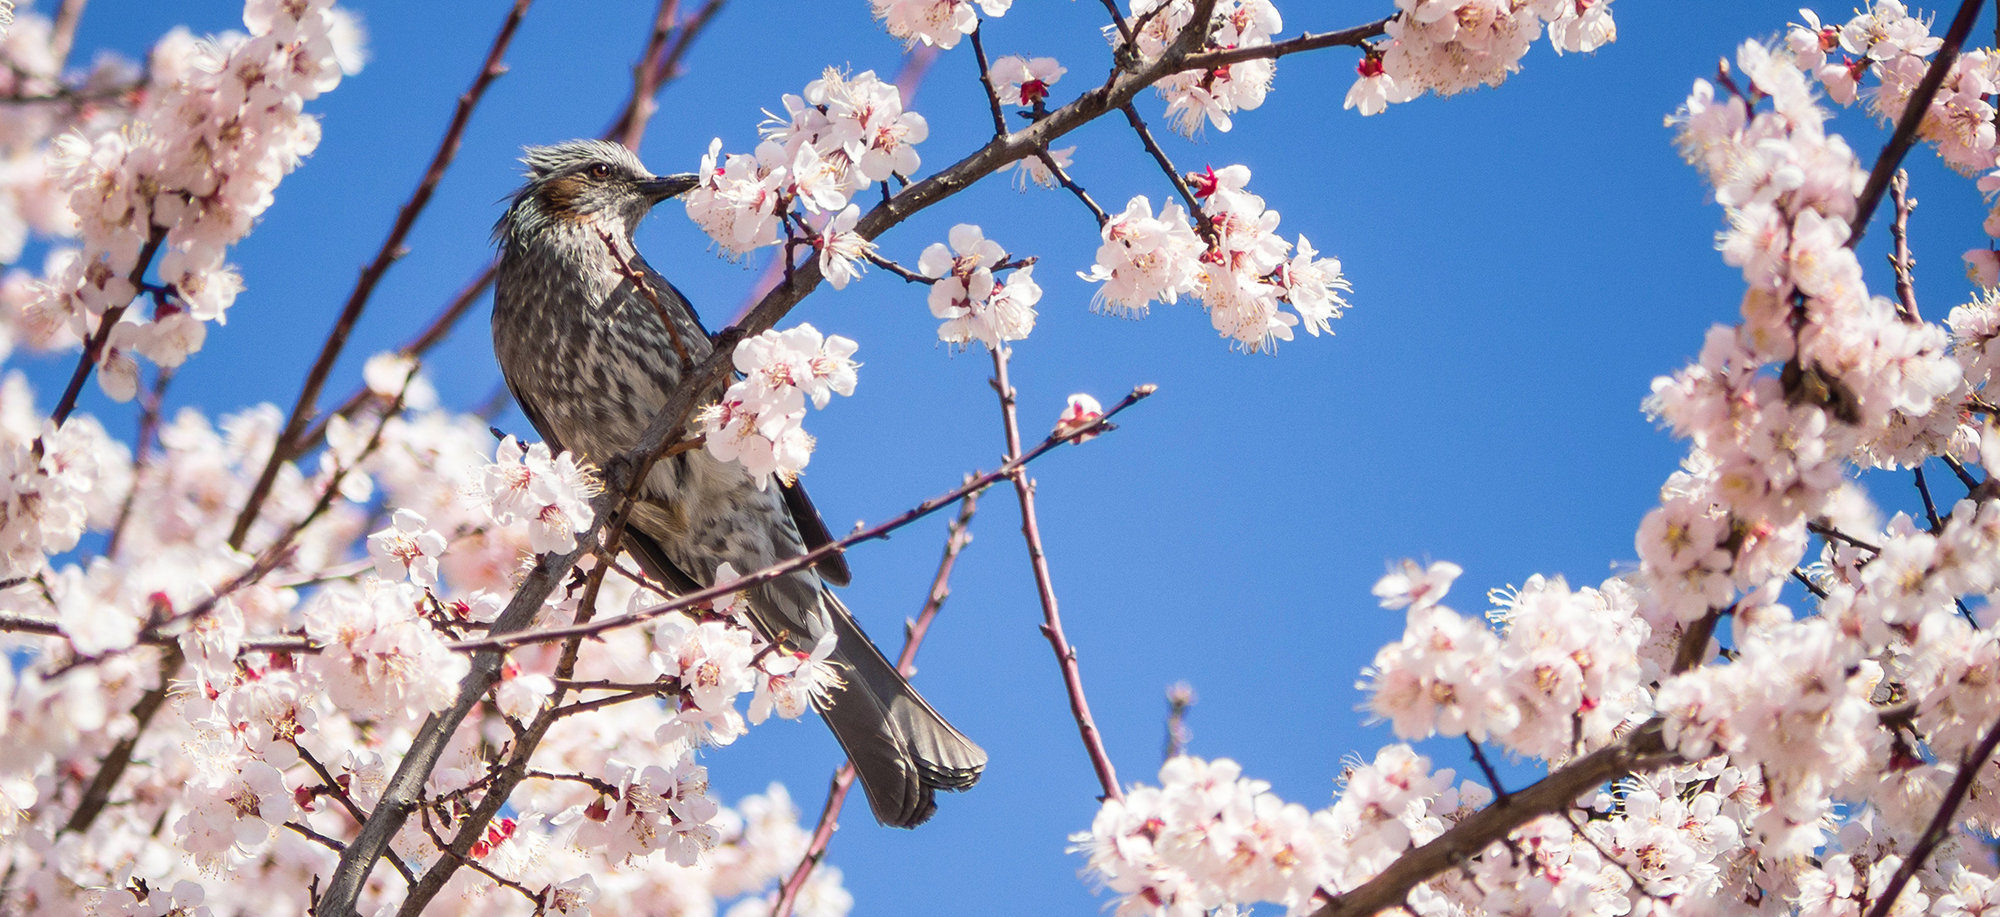 A Bird on a Cherry Tree Petal by Enzo Monteiro